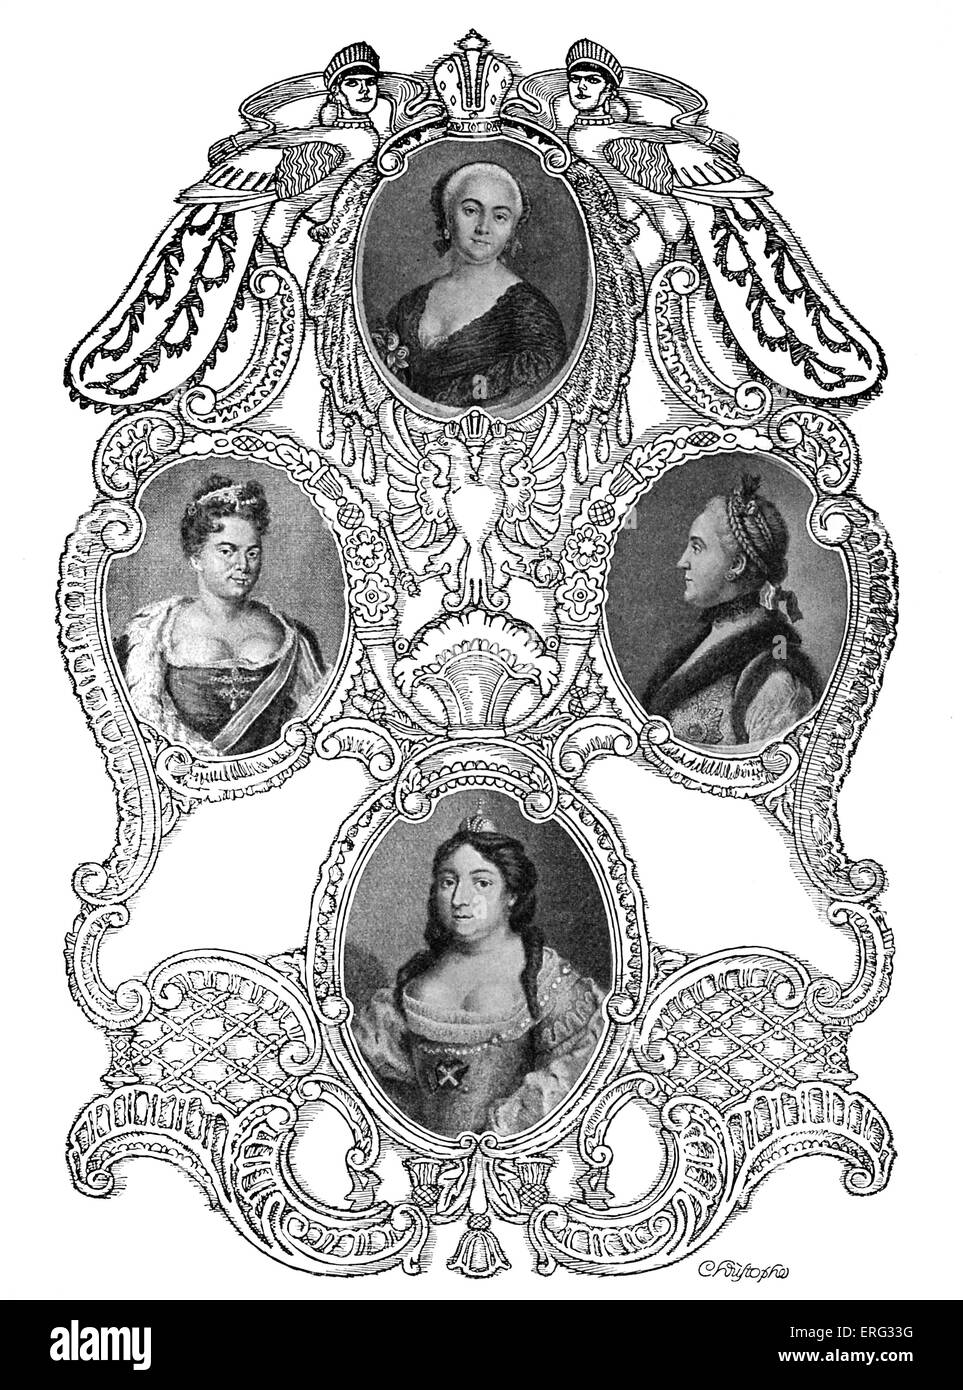 Four Russian Empresses. Catherine I 15 April 1684 - 17 May 1727; Anna Ivanovna 7 February 1693 - 28 October 1740; Elizabeth I 29 December 1709 - 5 January 1762; Catherine II 2 May 1729 - 17 November 1796. Stock Photo